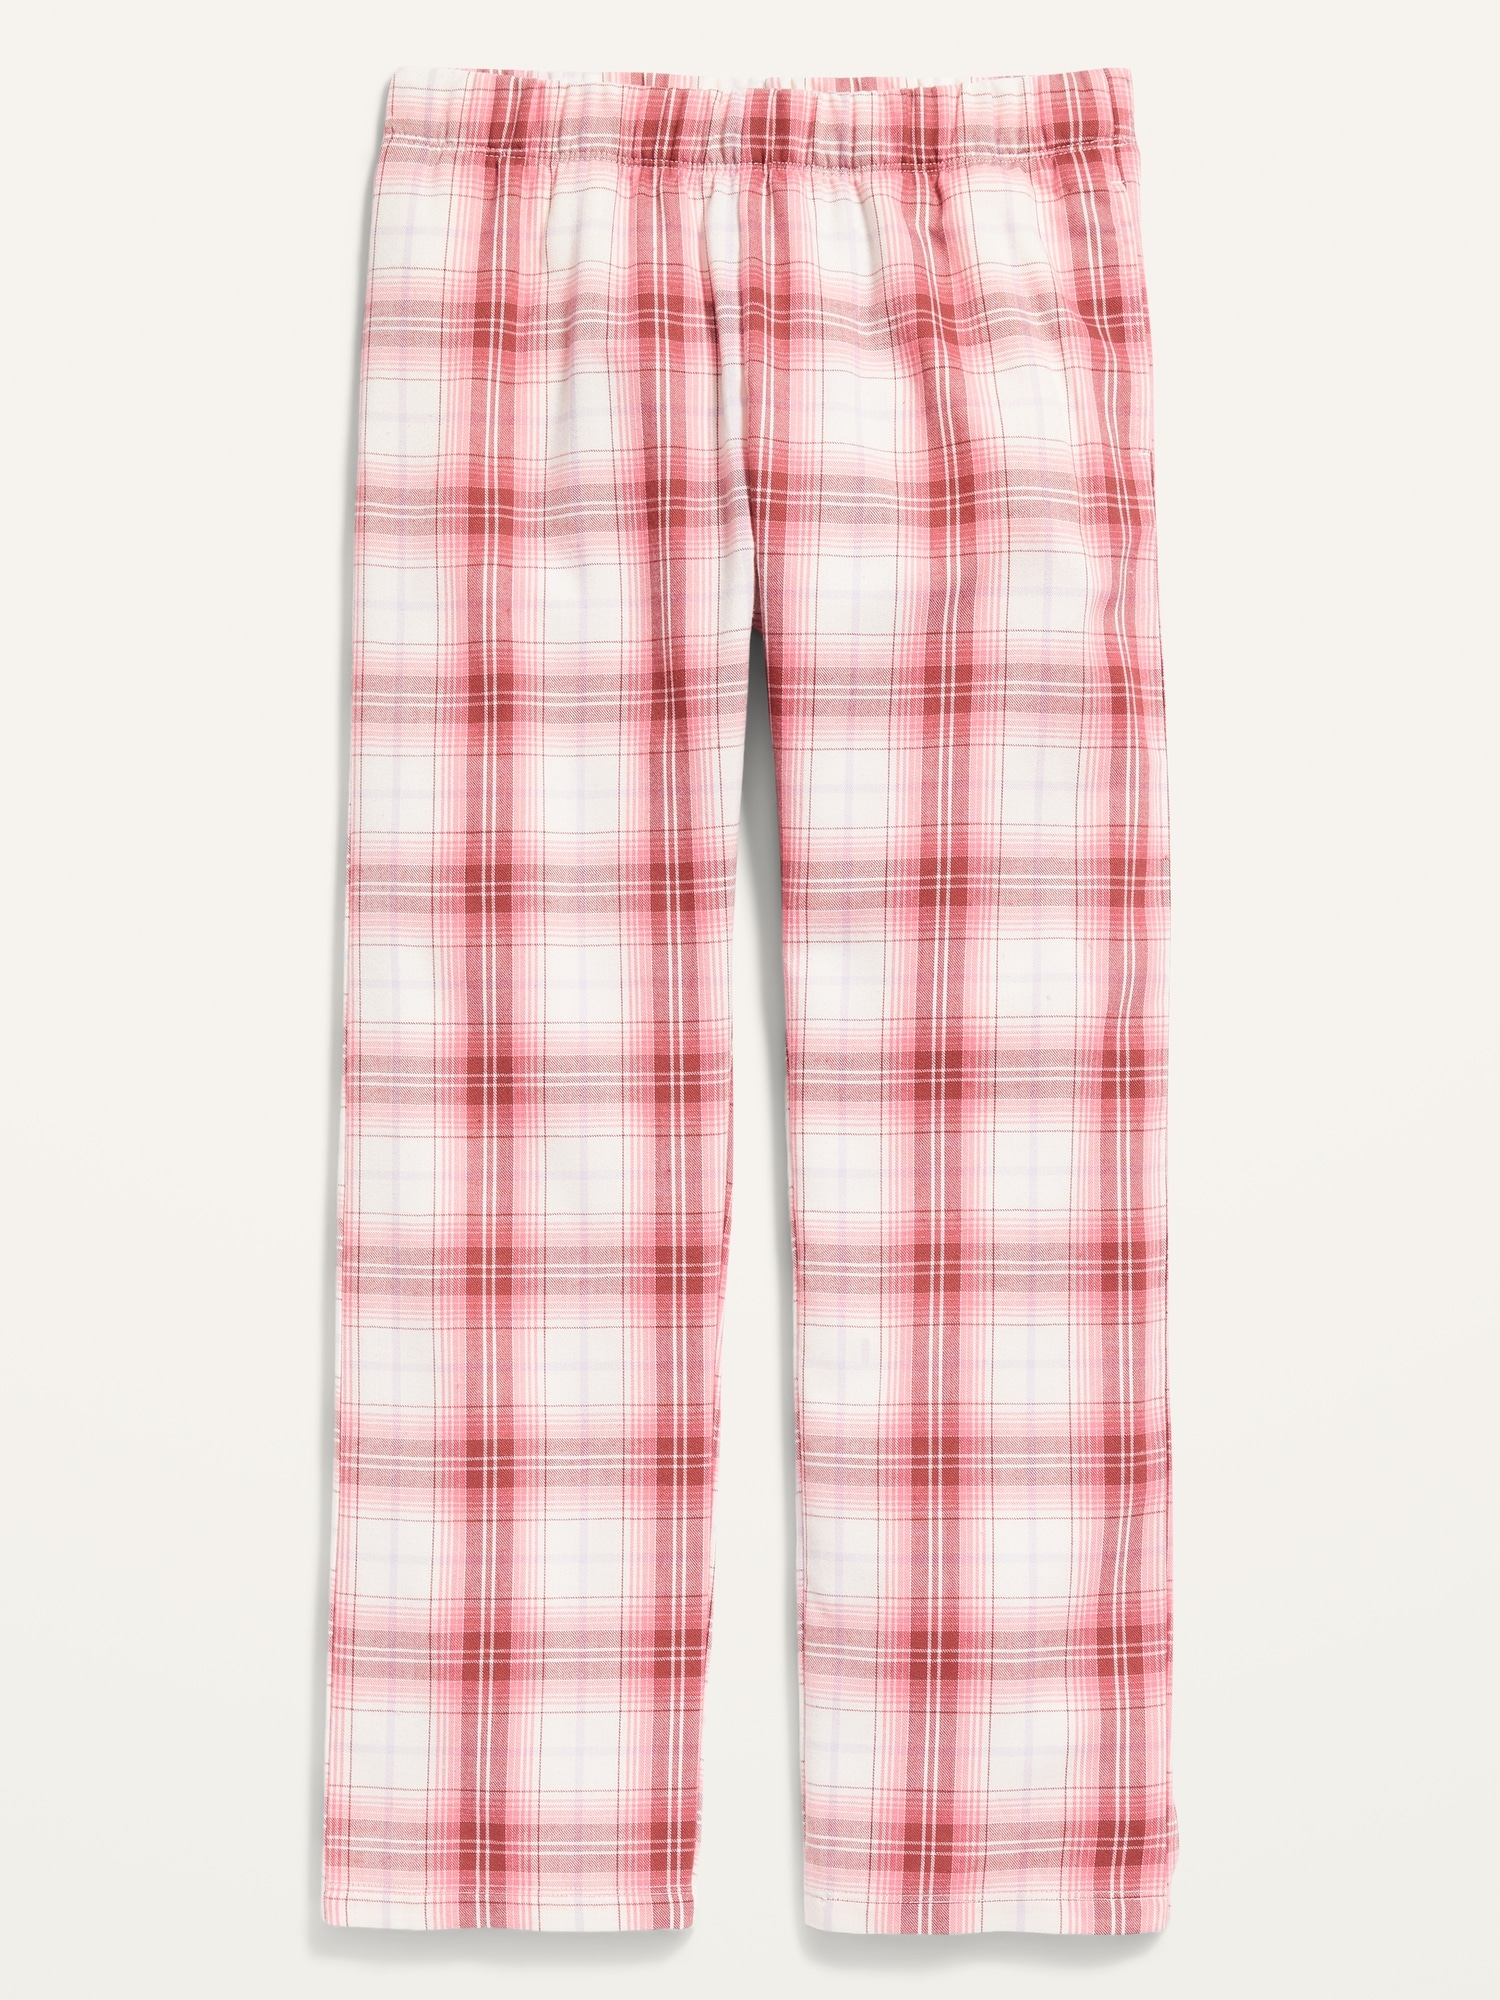 Plaid Pajamas - Red/white plaid - Ladies